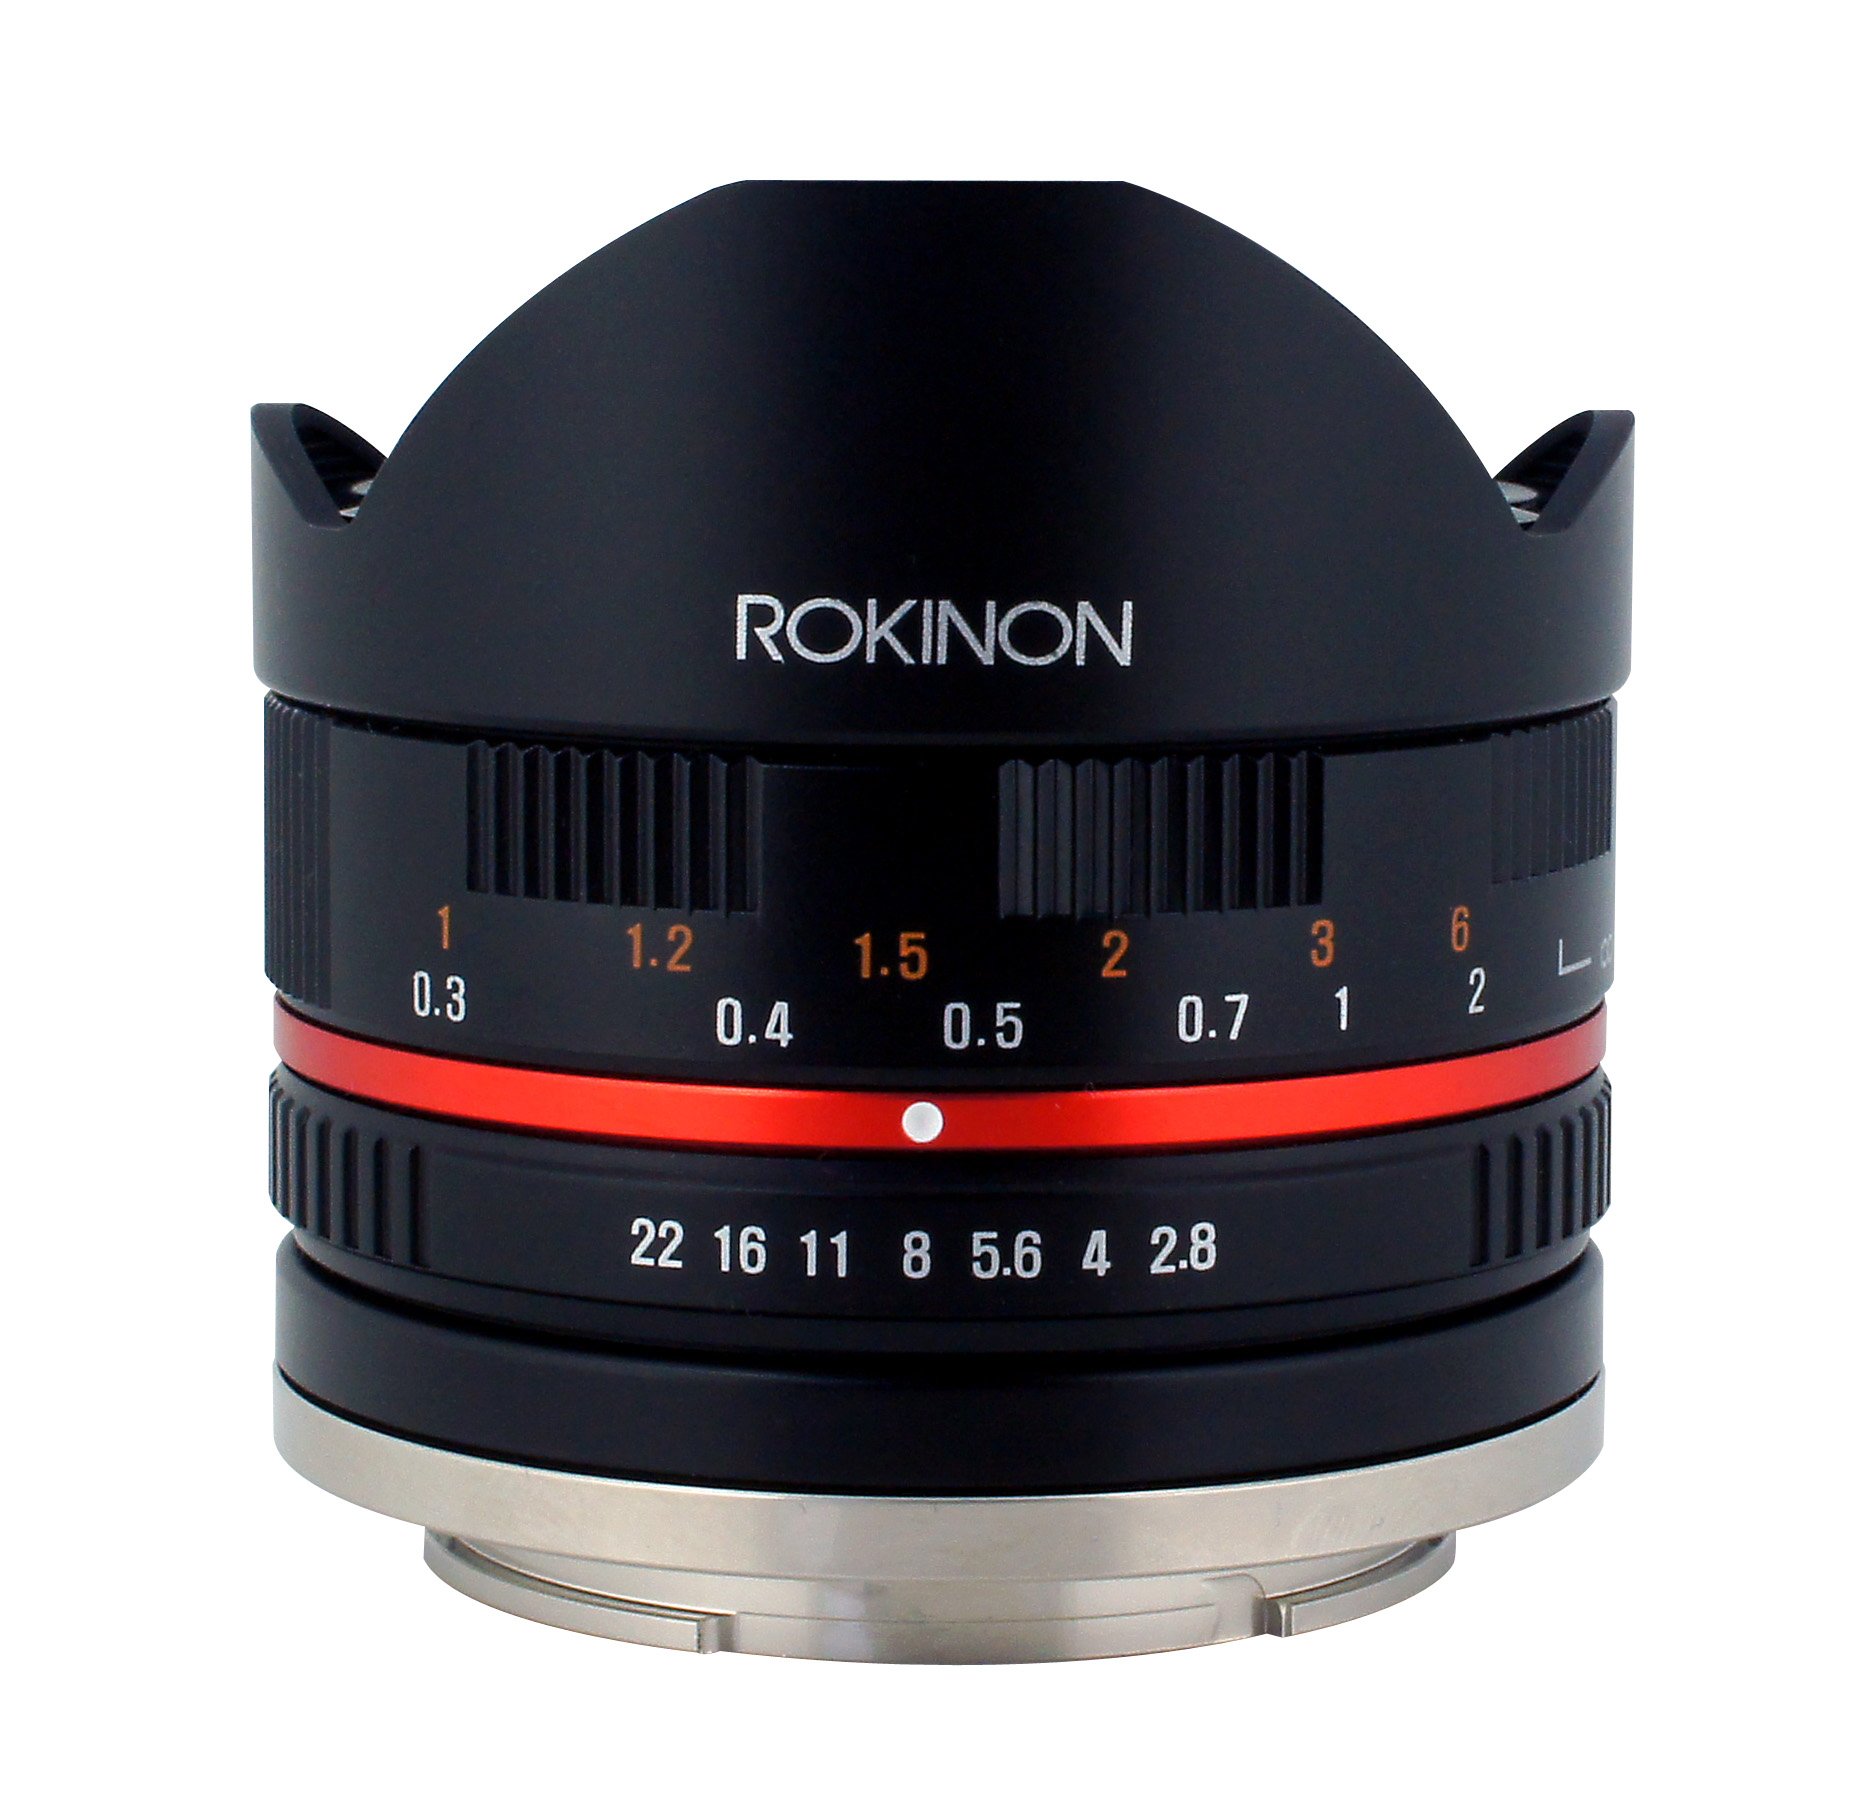 Rokinon 8mm F2.8 UMC Fisheye II (Black) Lens for Fuji X Mount Digital Cameras (RK8MBK28-FX)